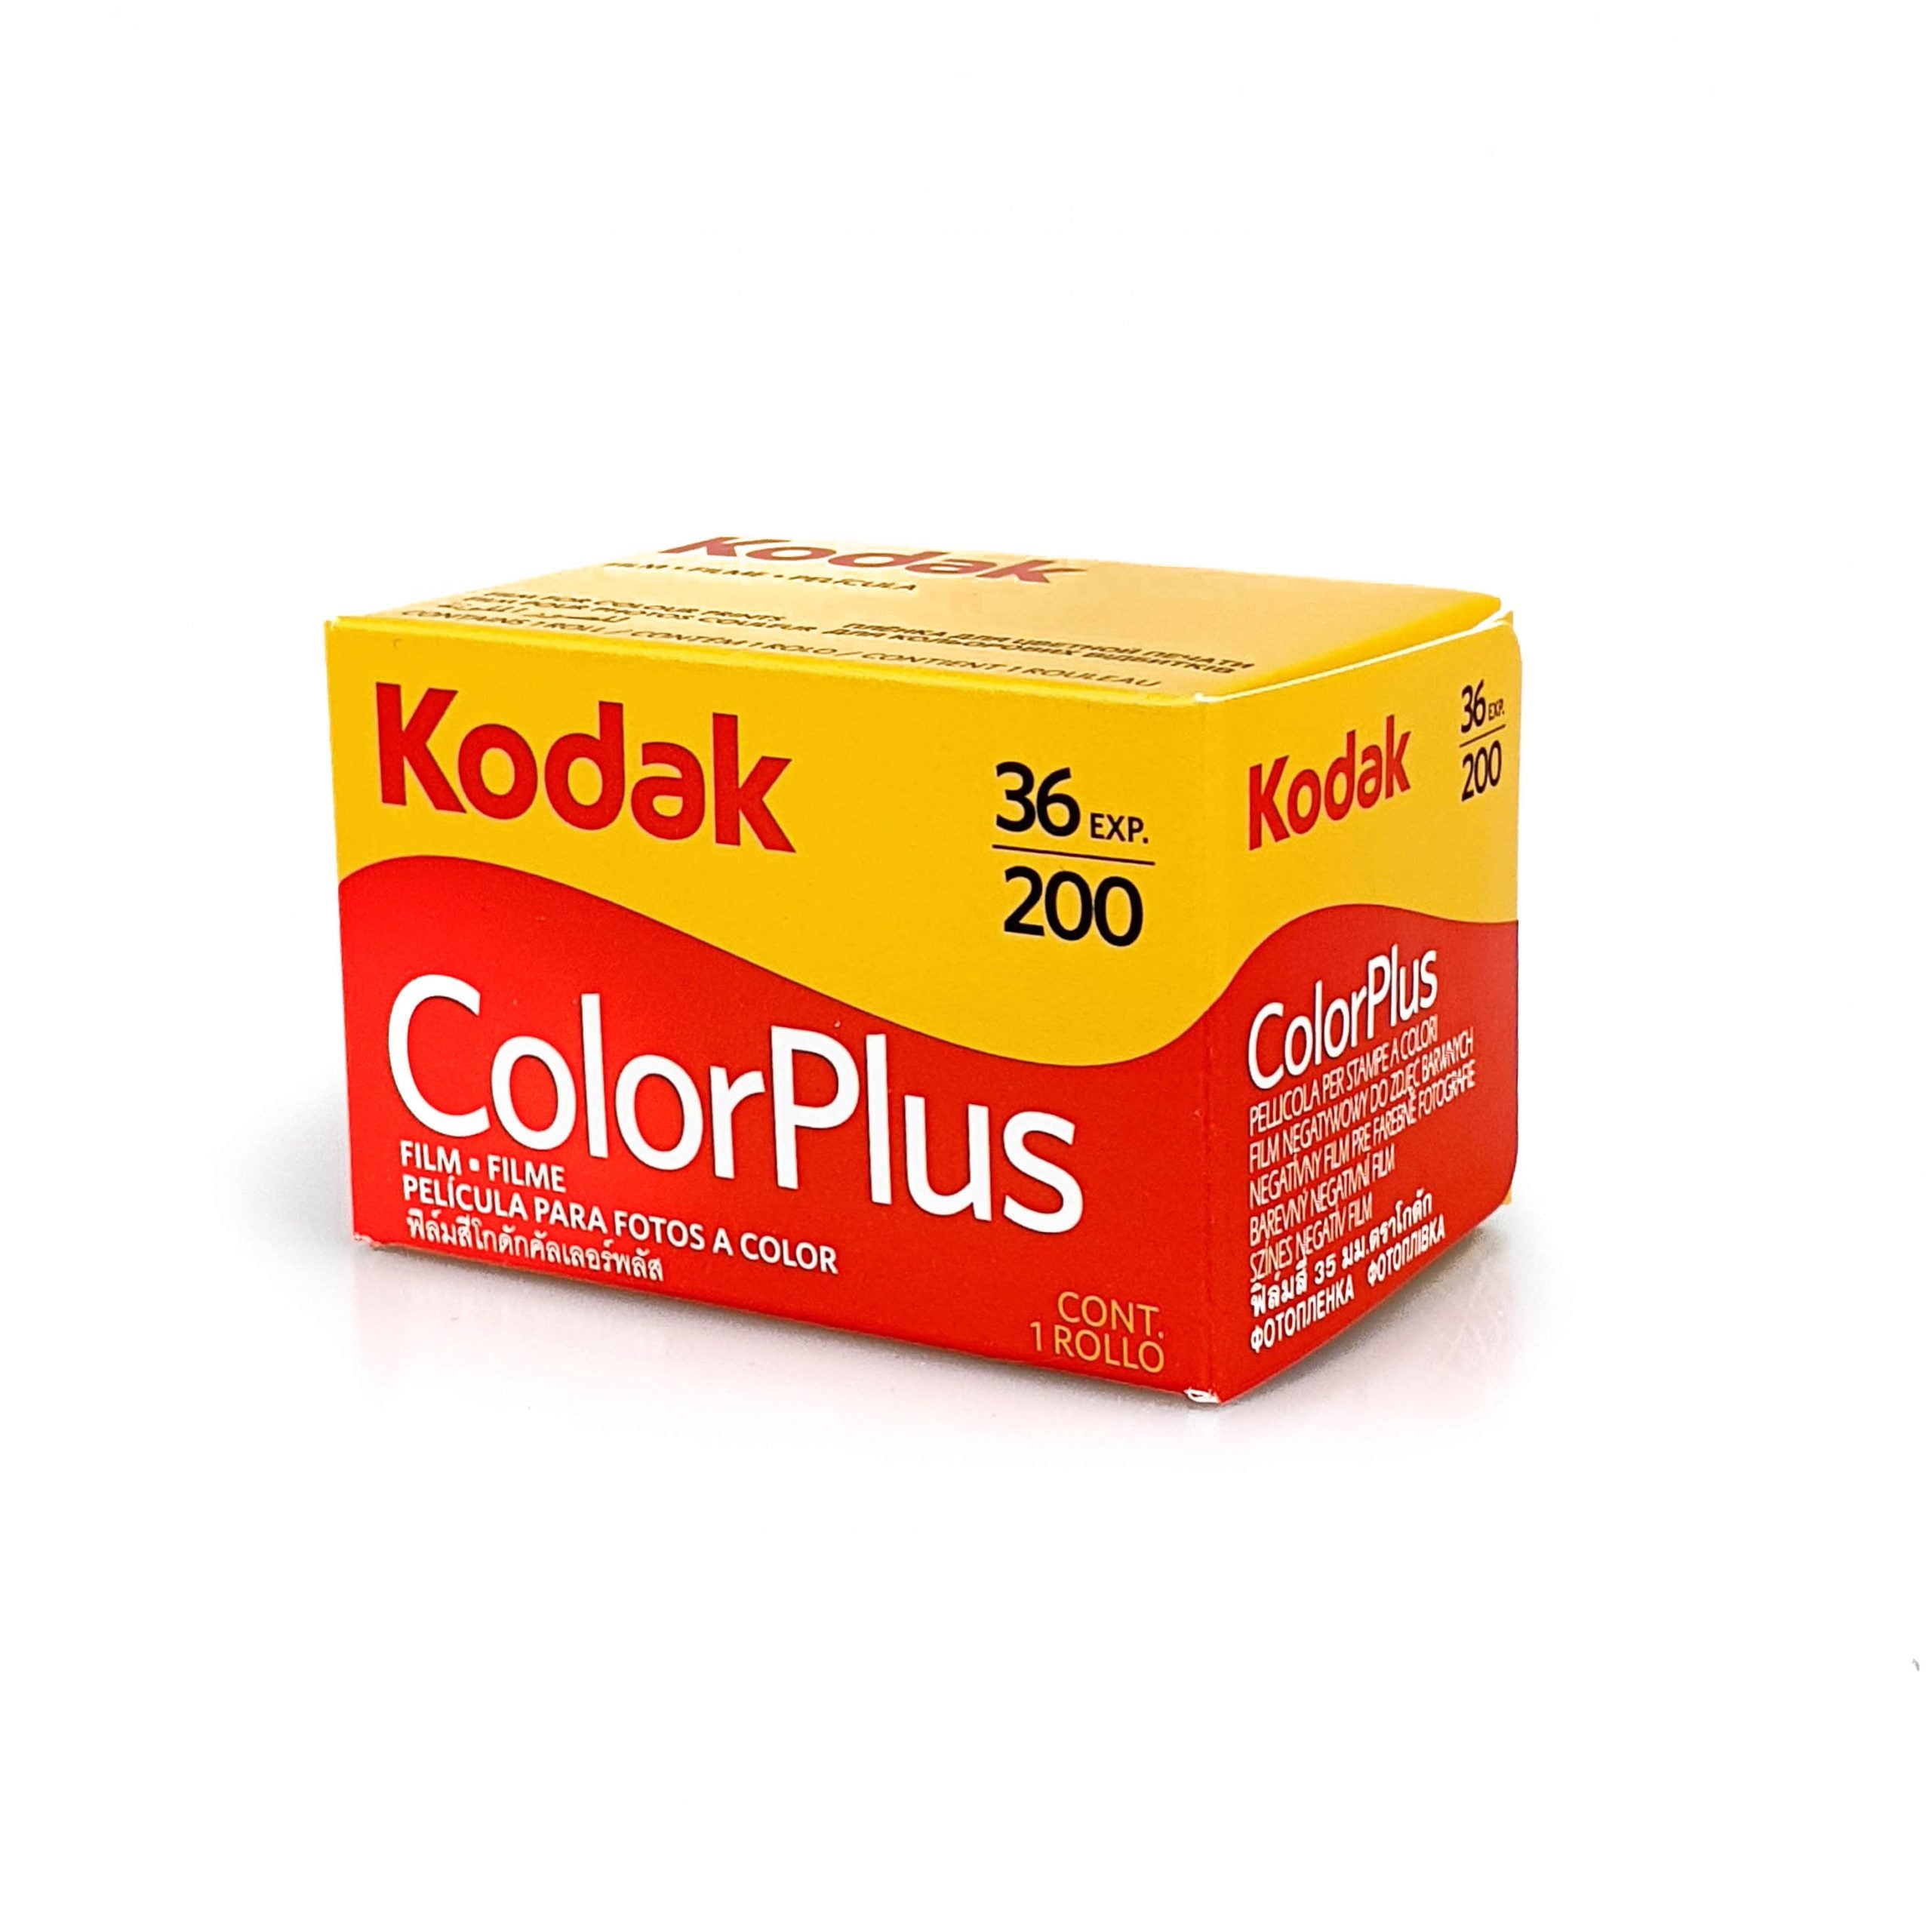 Kodak ColorPlus 200 36 exp. – dubblefilm